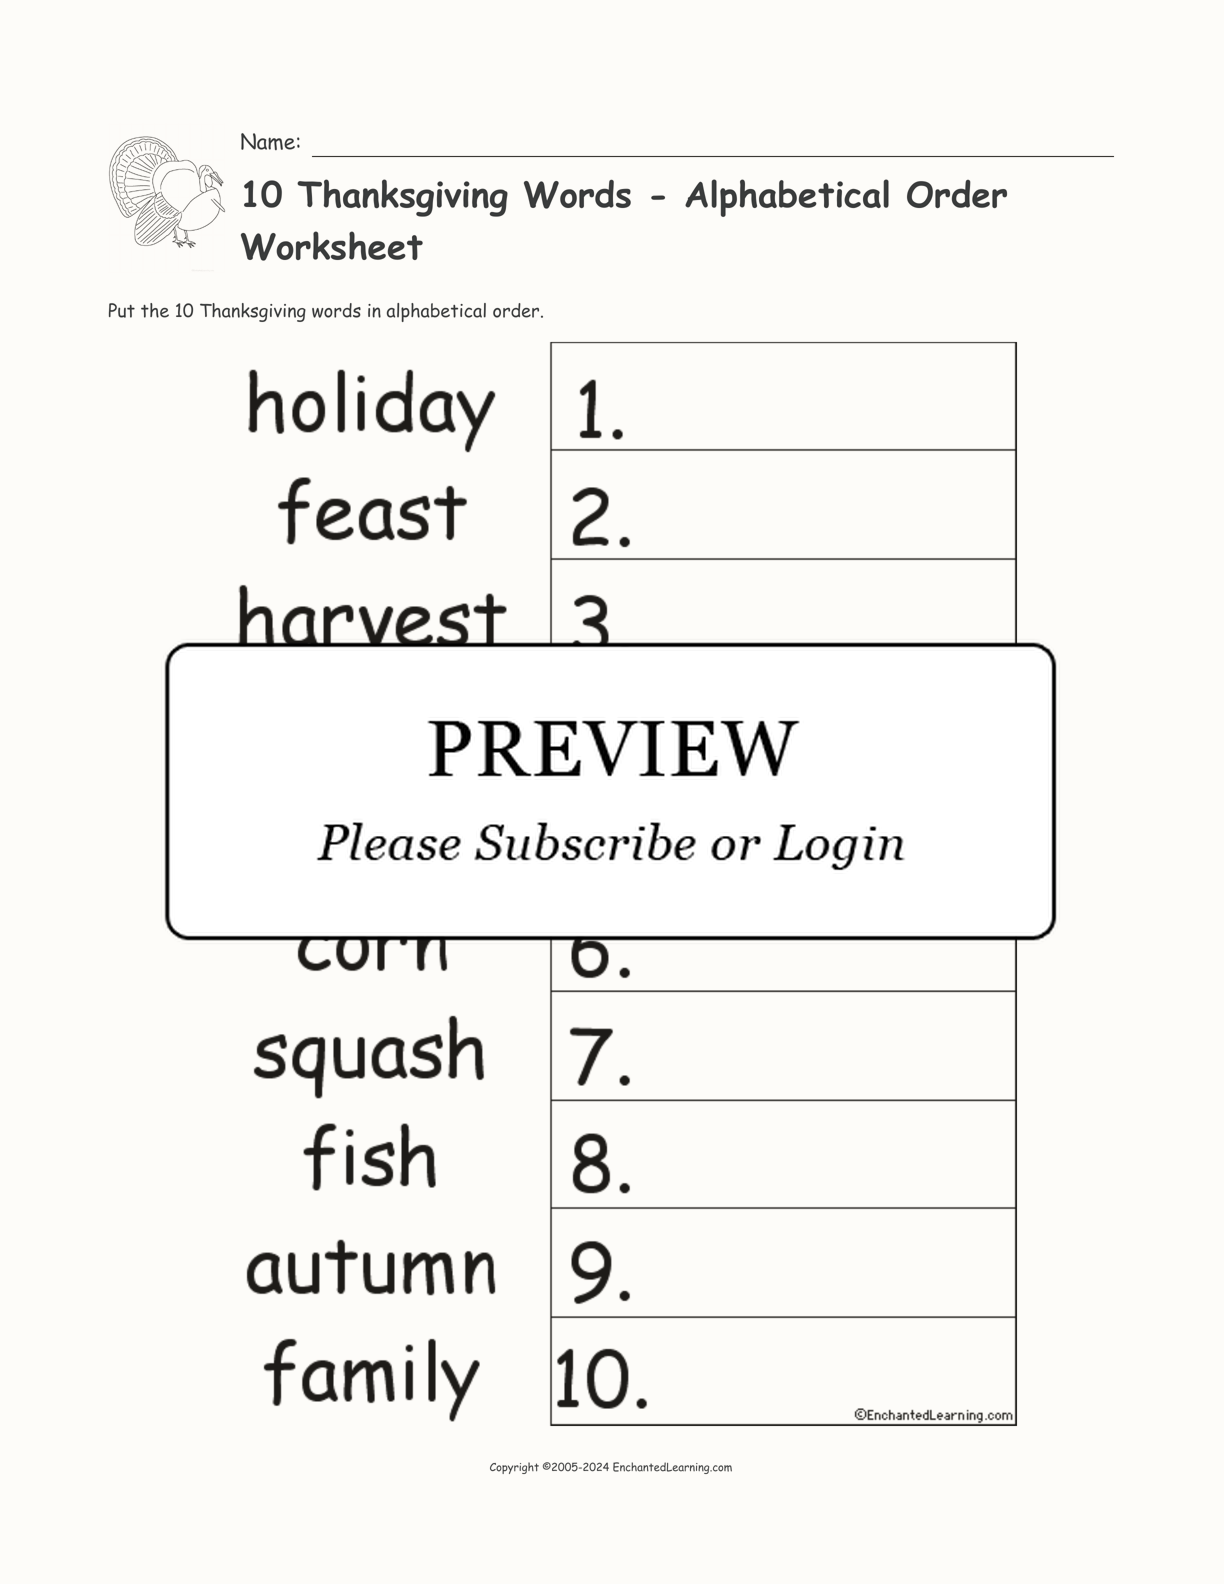 10 Thanksgiving Words - Alphabetical Order Worksheet interactive worksheet page 1